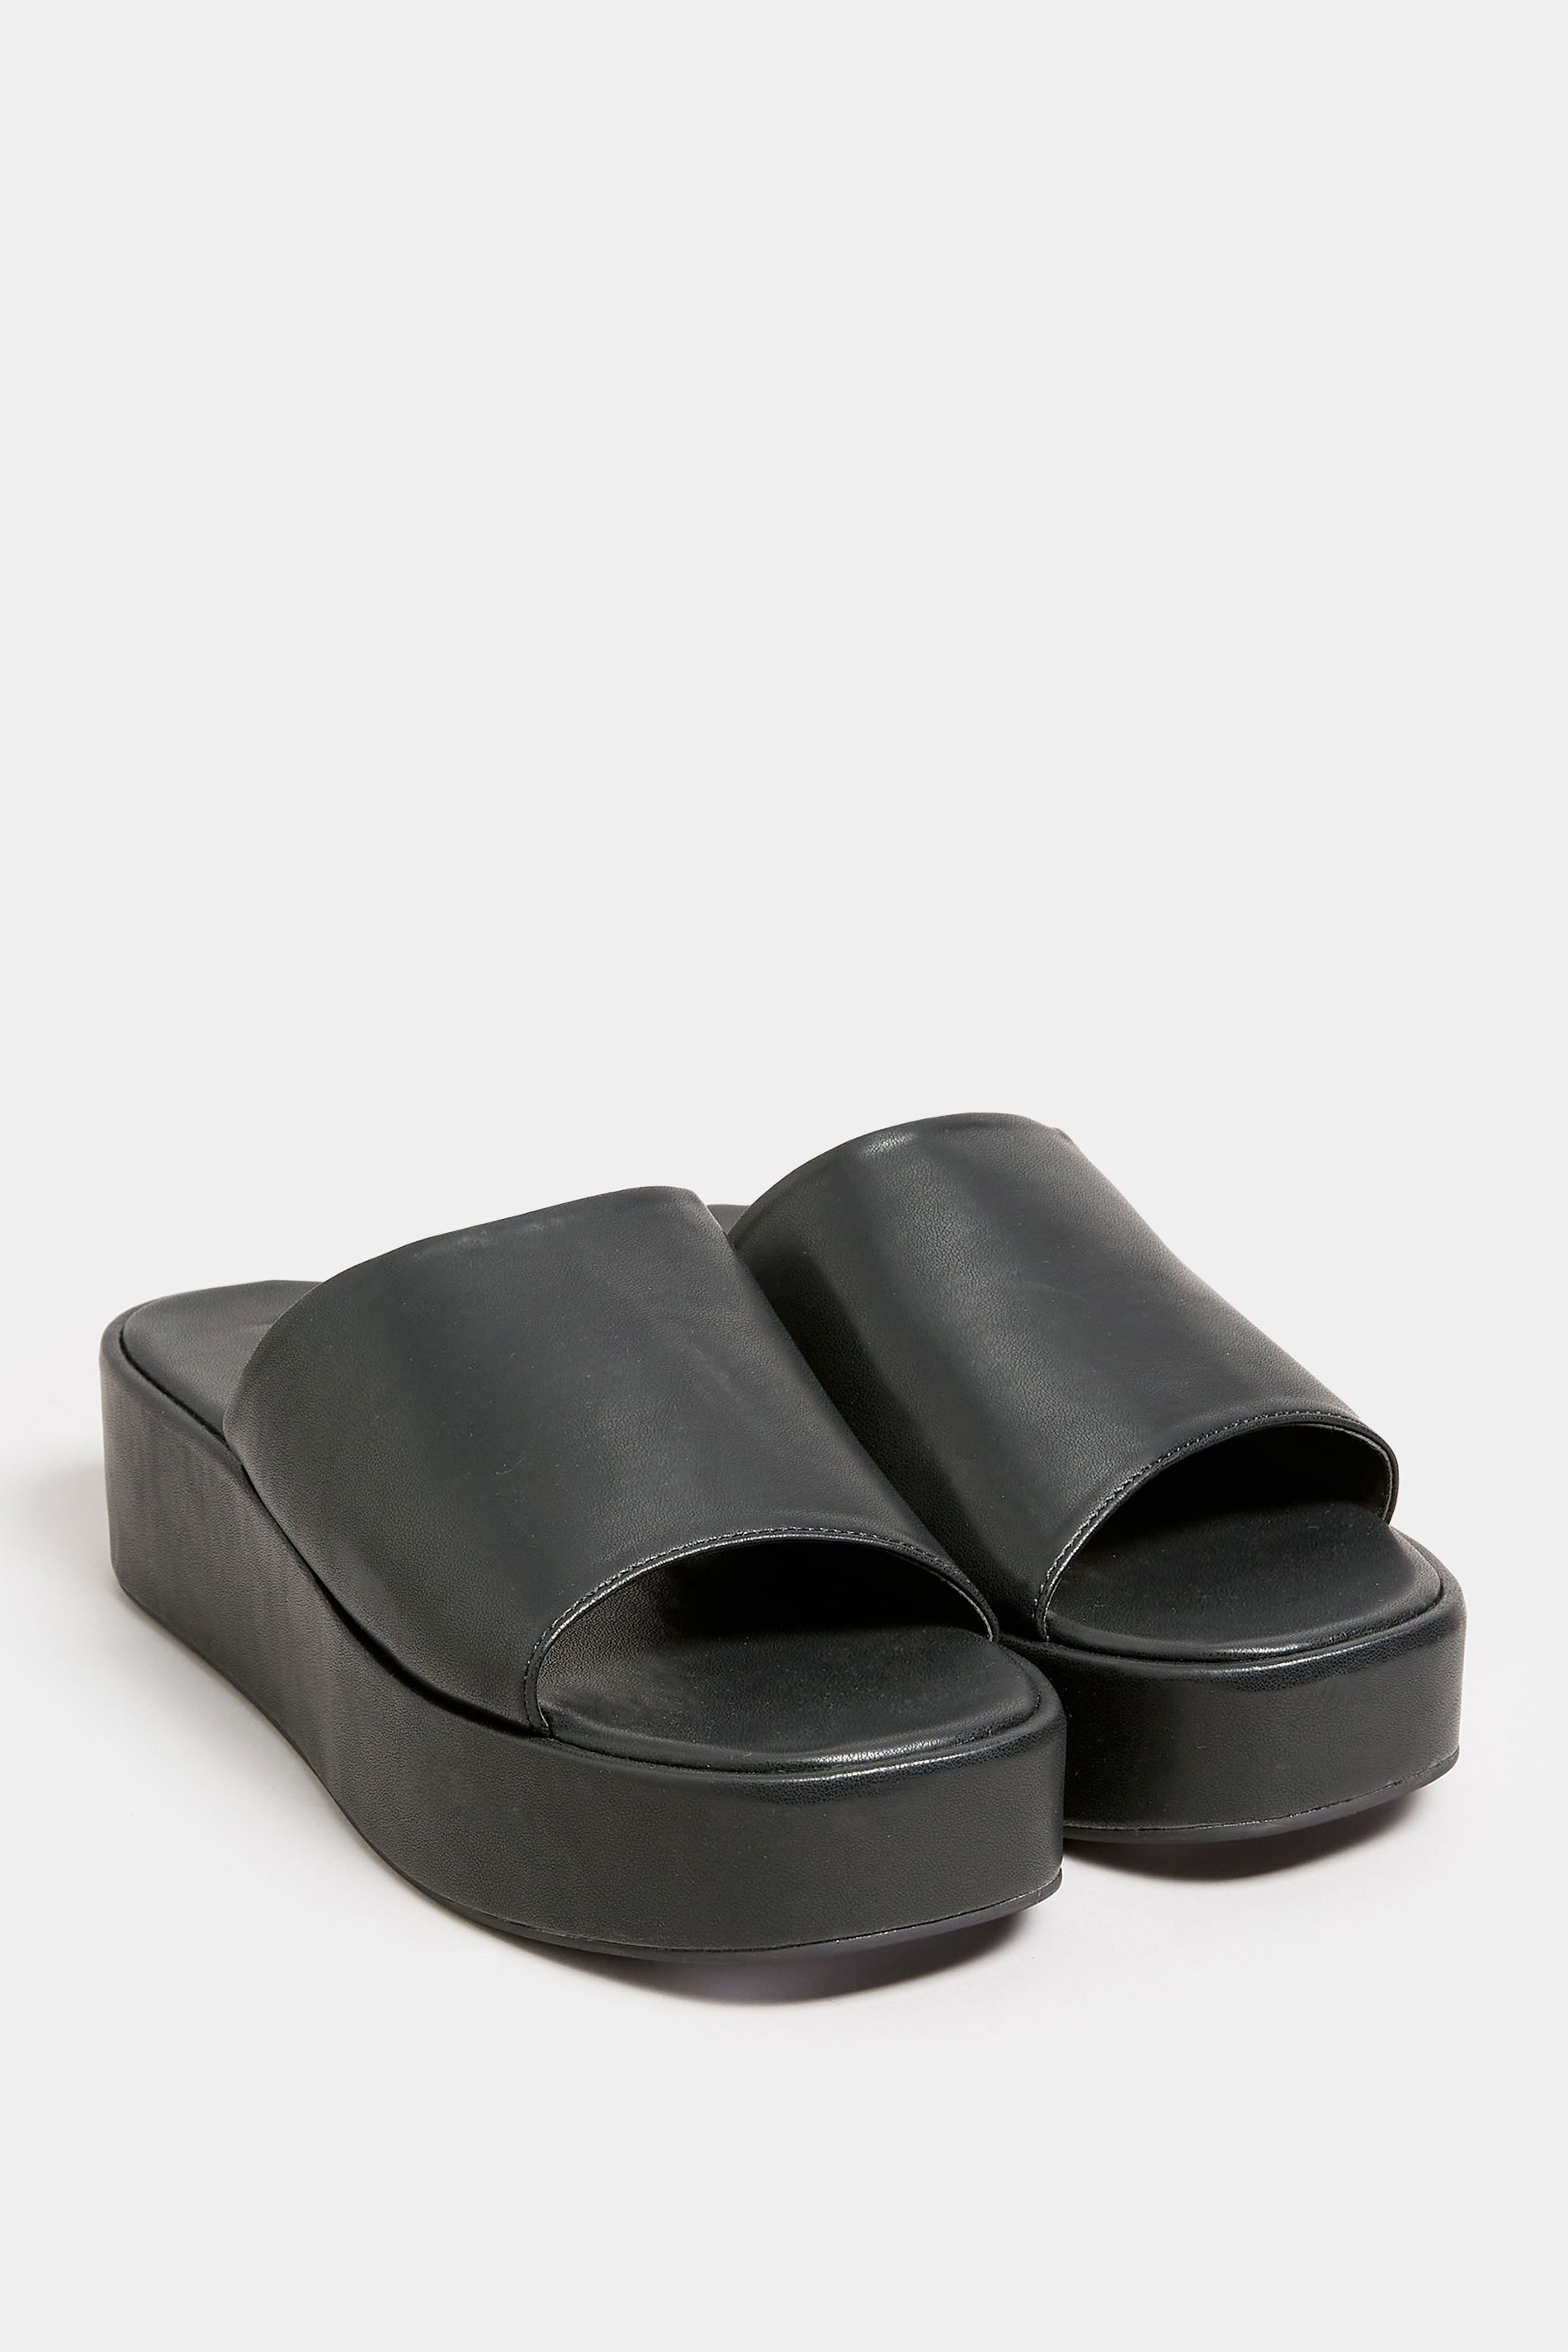 Ava & Ever - Black Platform Sandals on Designer Wardrobe-sgquangbinhtourist.com.vn